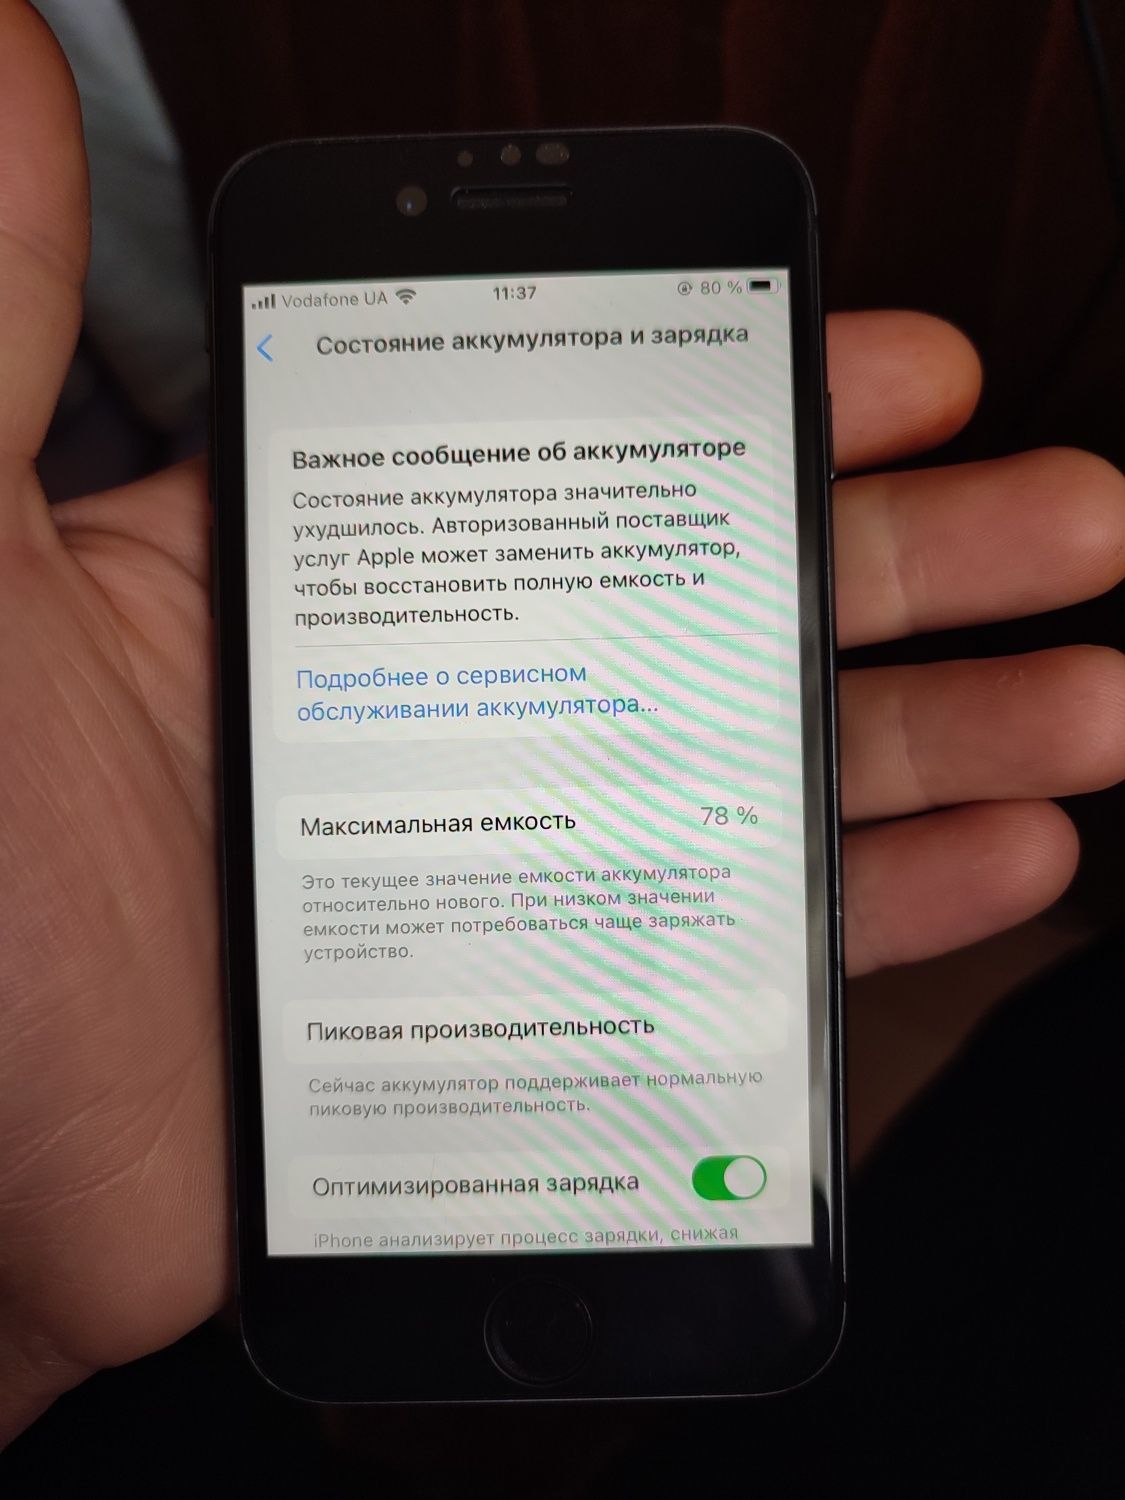 IPhone 8 neverlock - Айфон 8 неверлок(64gb) black neverlock в идеальн